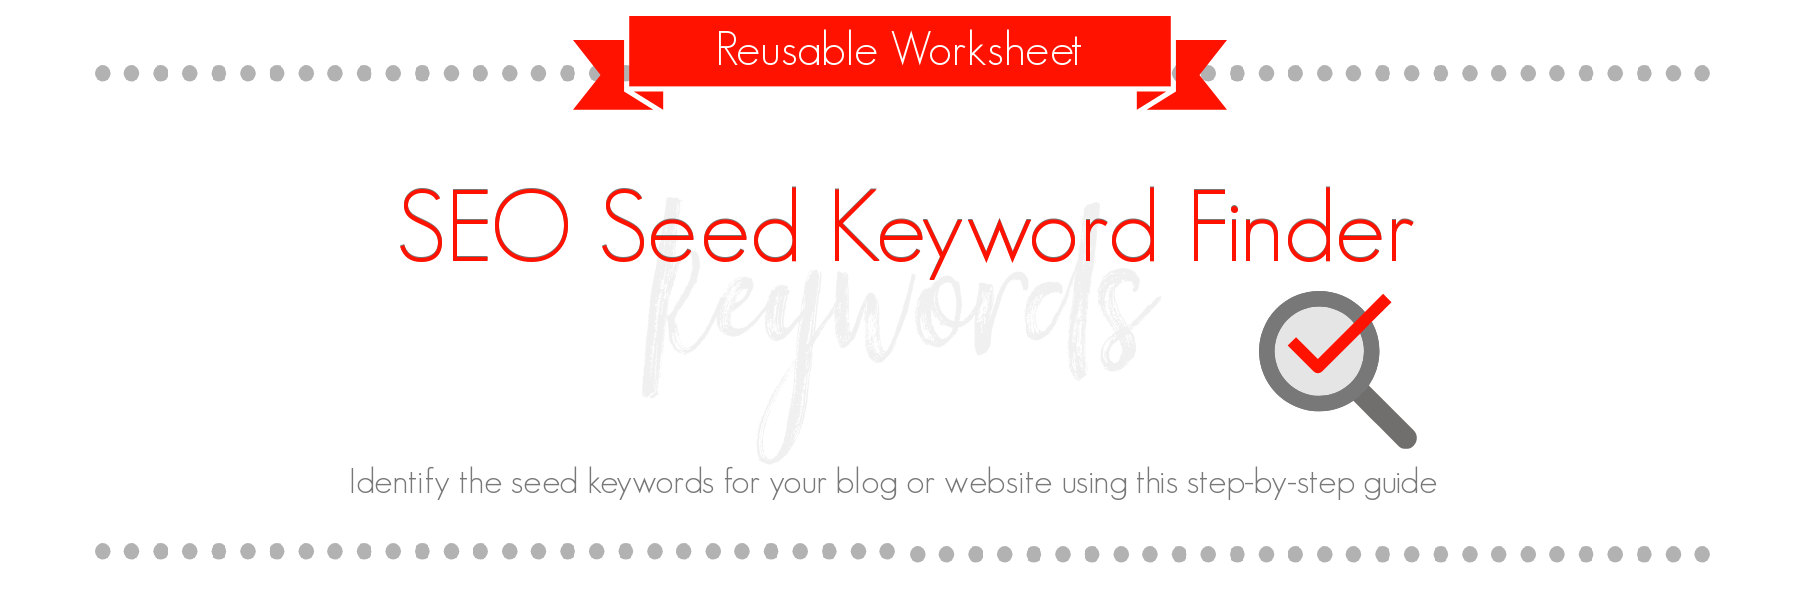 SEO Seed Keyword Finder